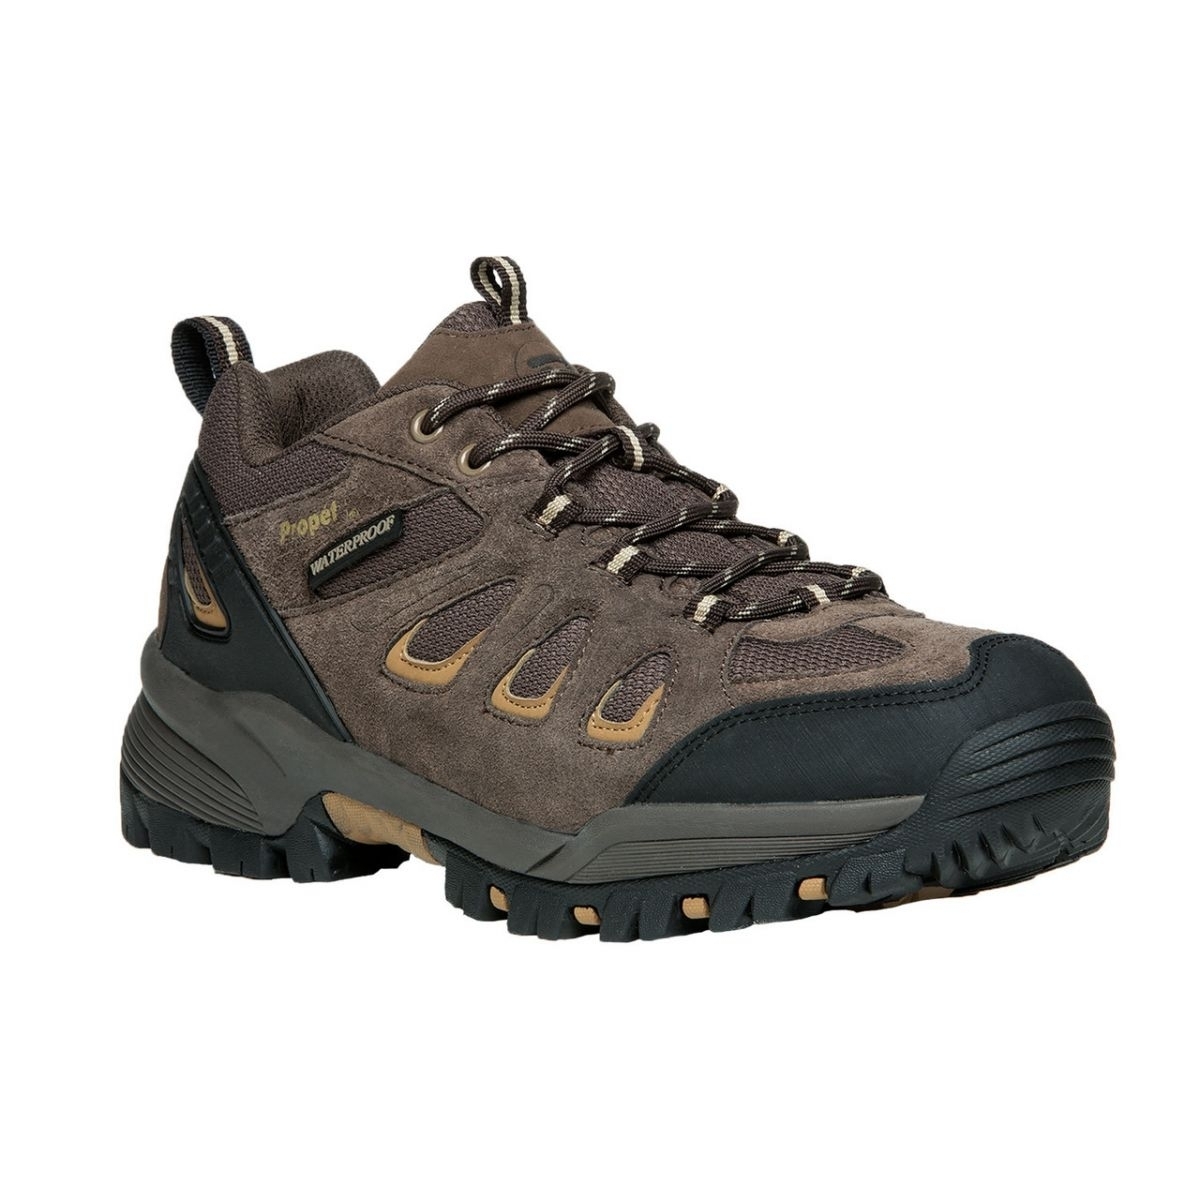 Propet Men's Ridge Walker Low Hiking Shoe Brown - M3598BR BROWN - BROWN, 16 3X-Wide